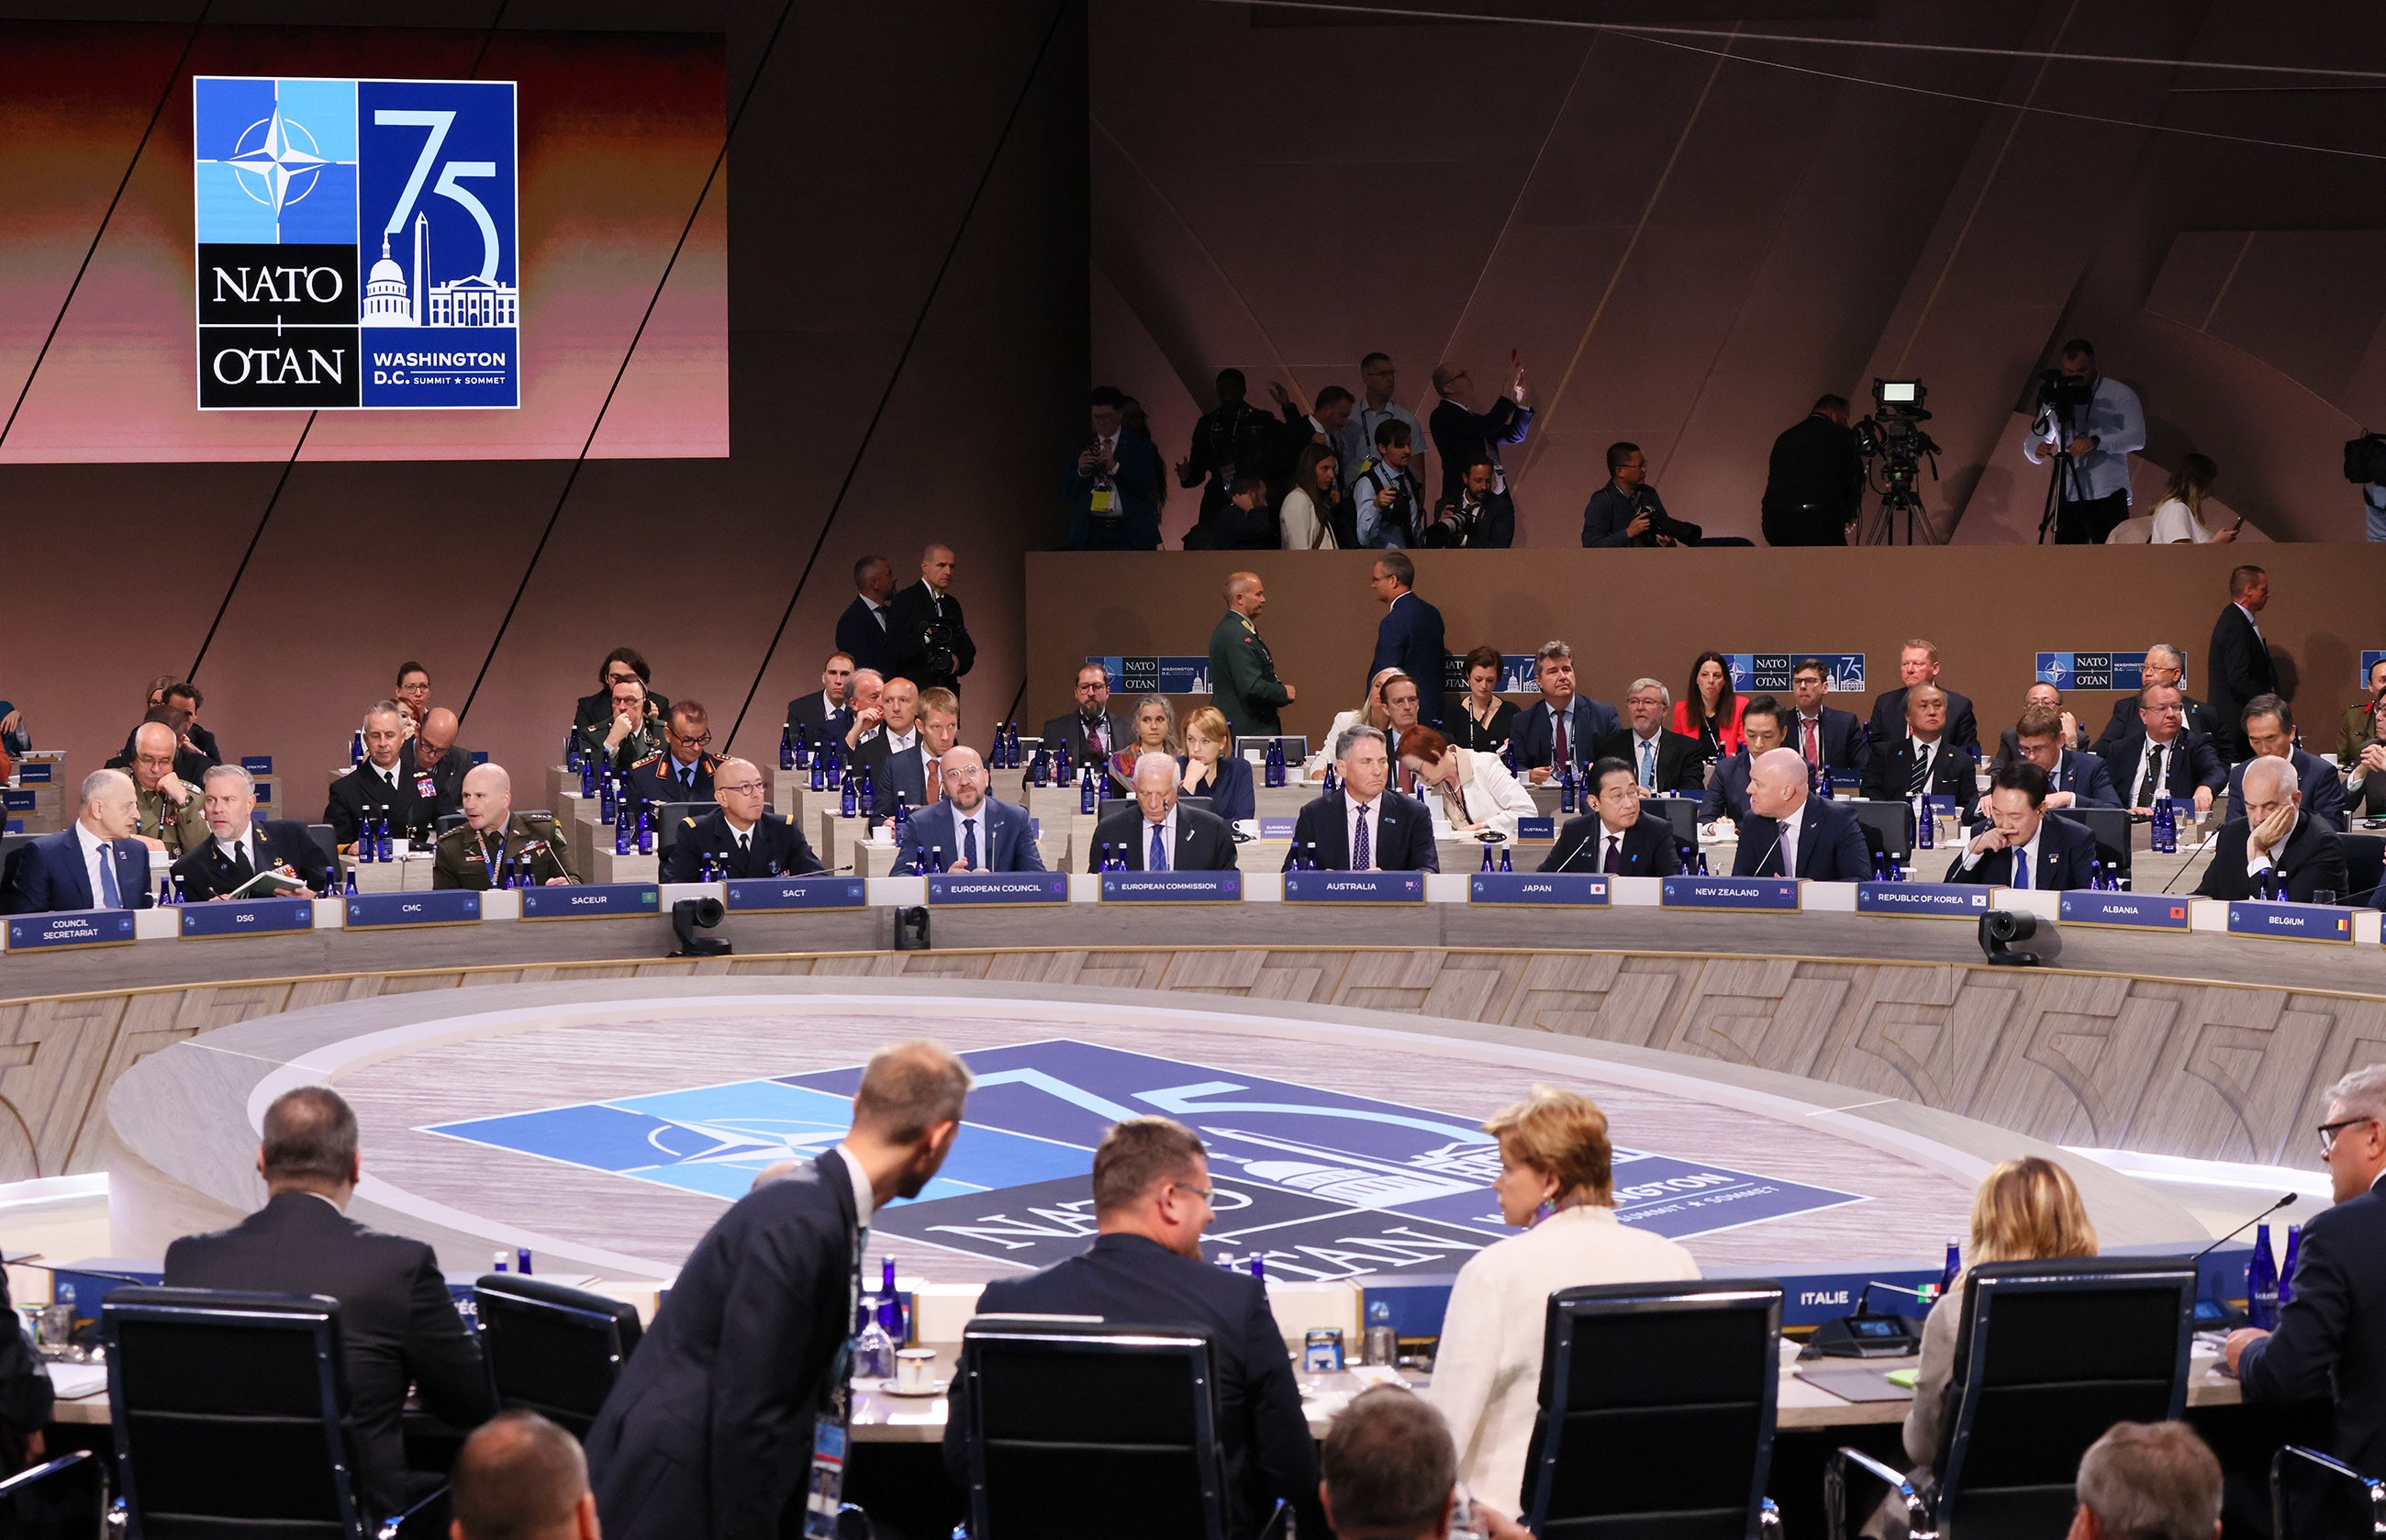 Prime Minister Kishida attending the Partners Session of the NATO Summit (4)